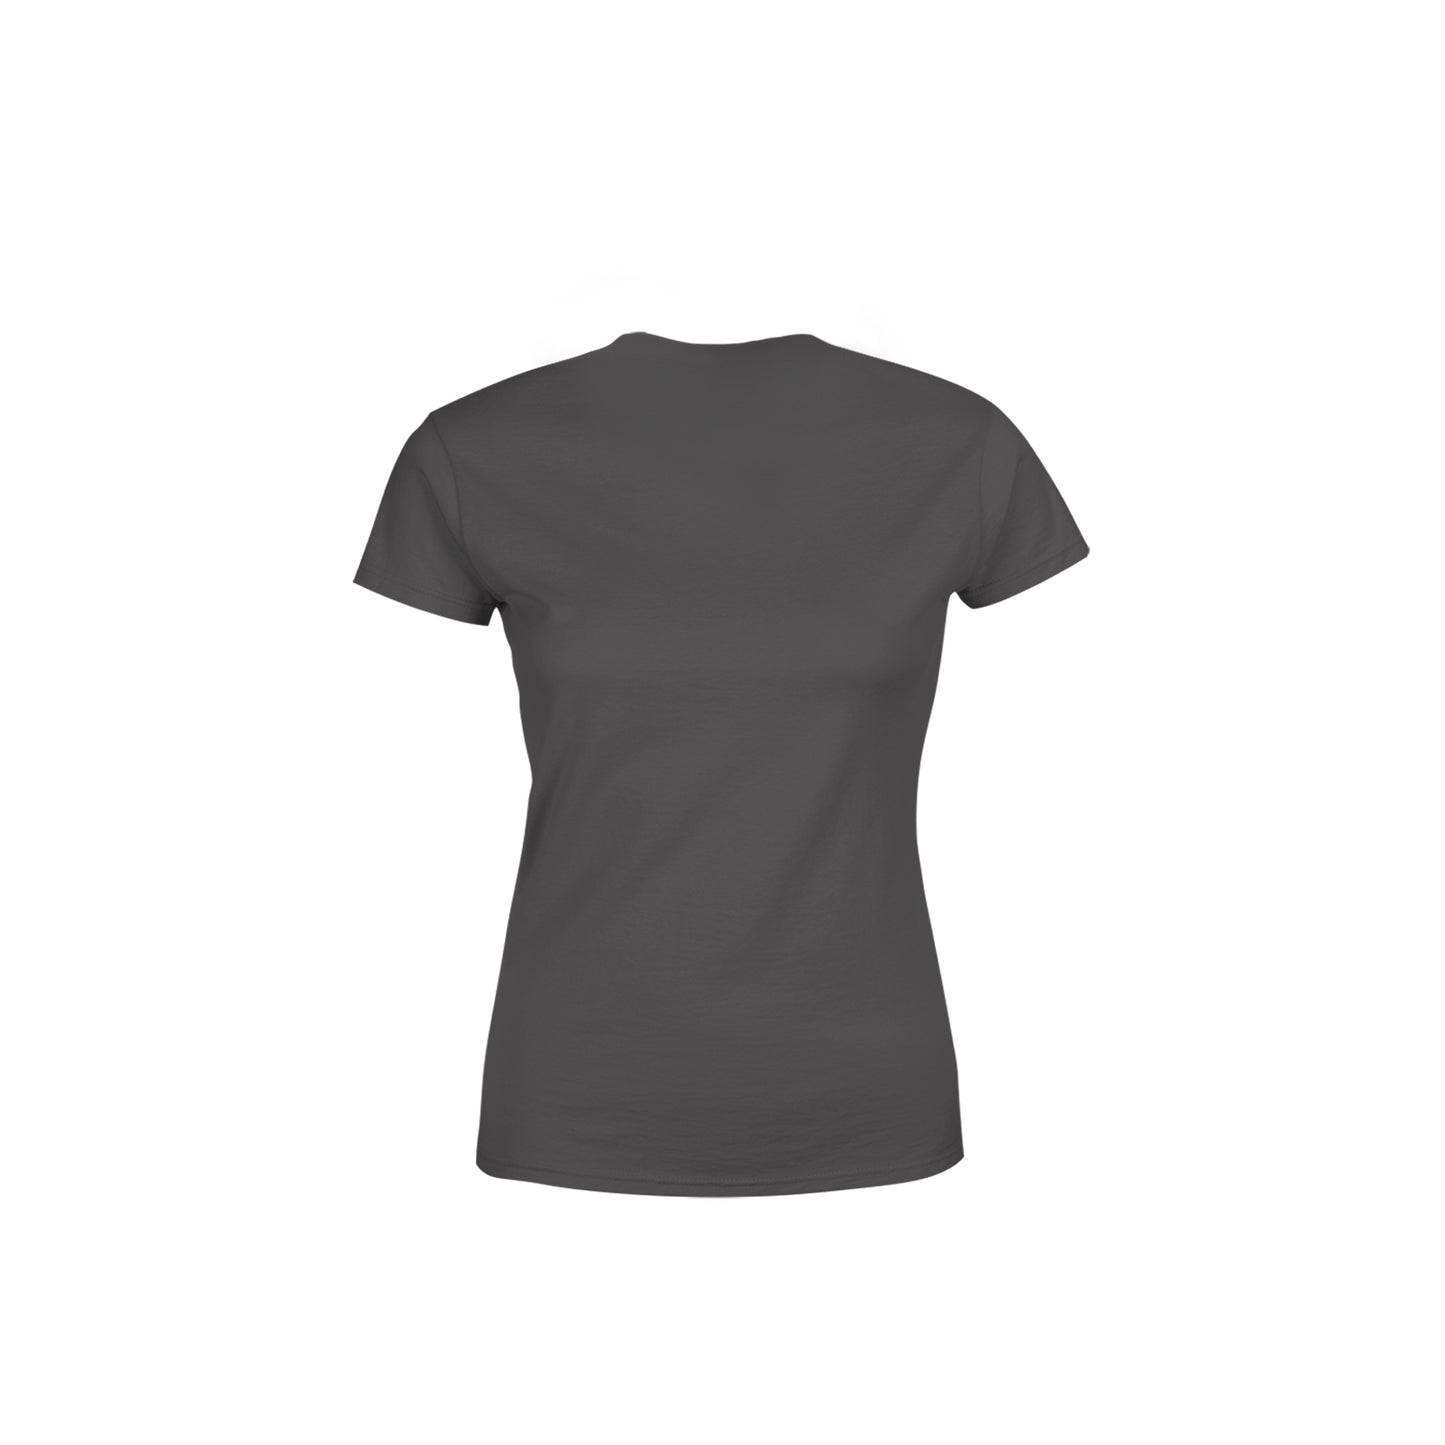 28 Number Women's T-Shirt (Charcoal Grey)